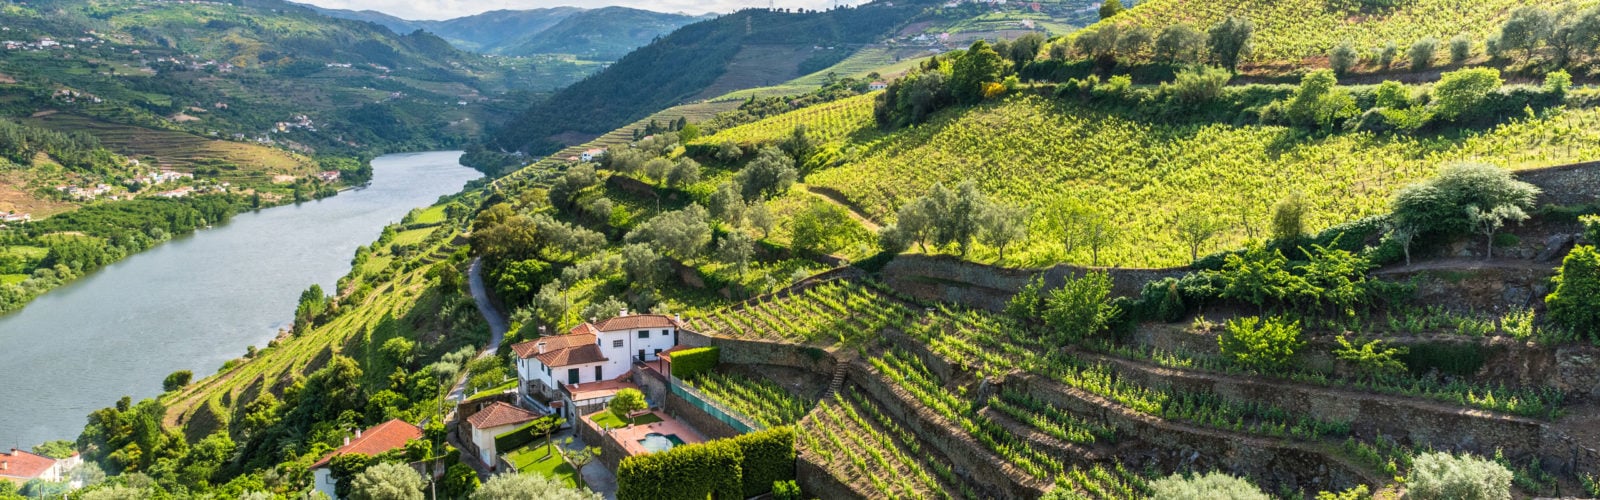 vineyards-landscape-douro-valley-portugal